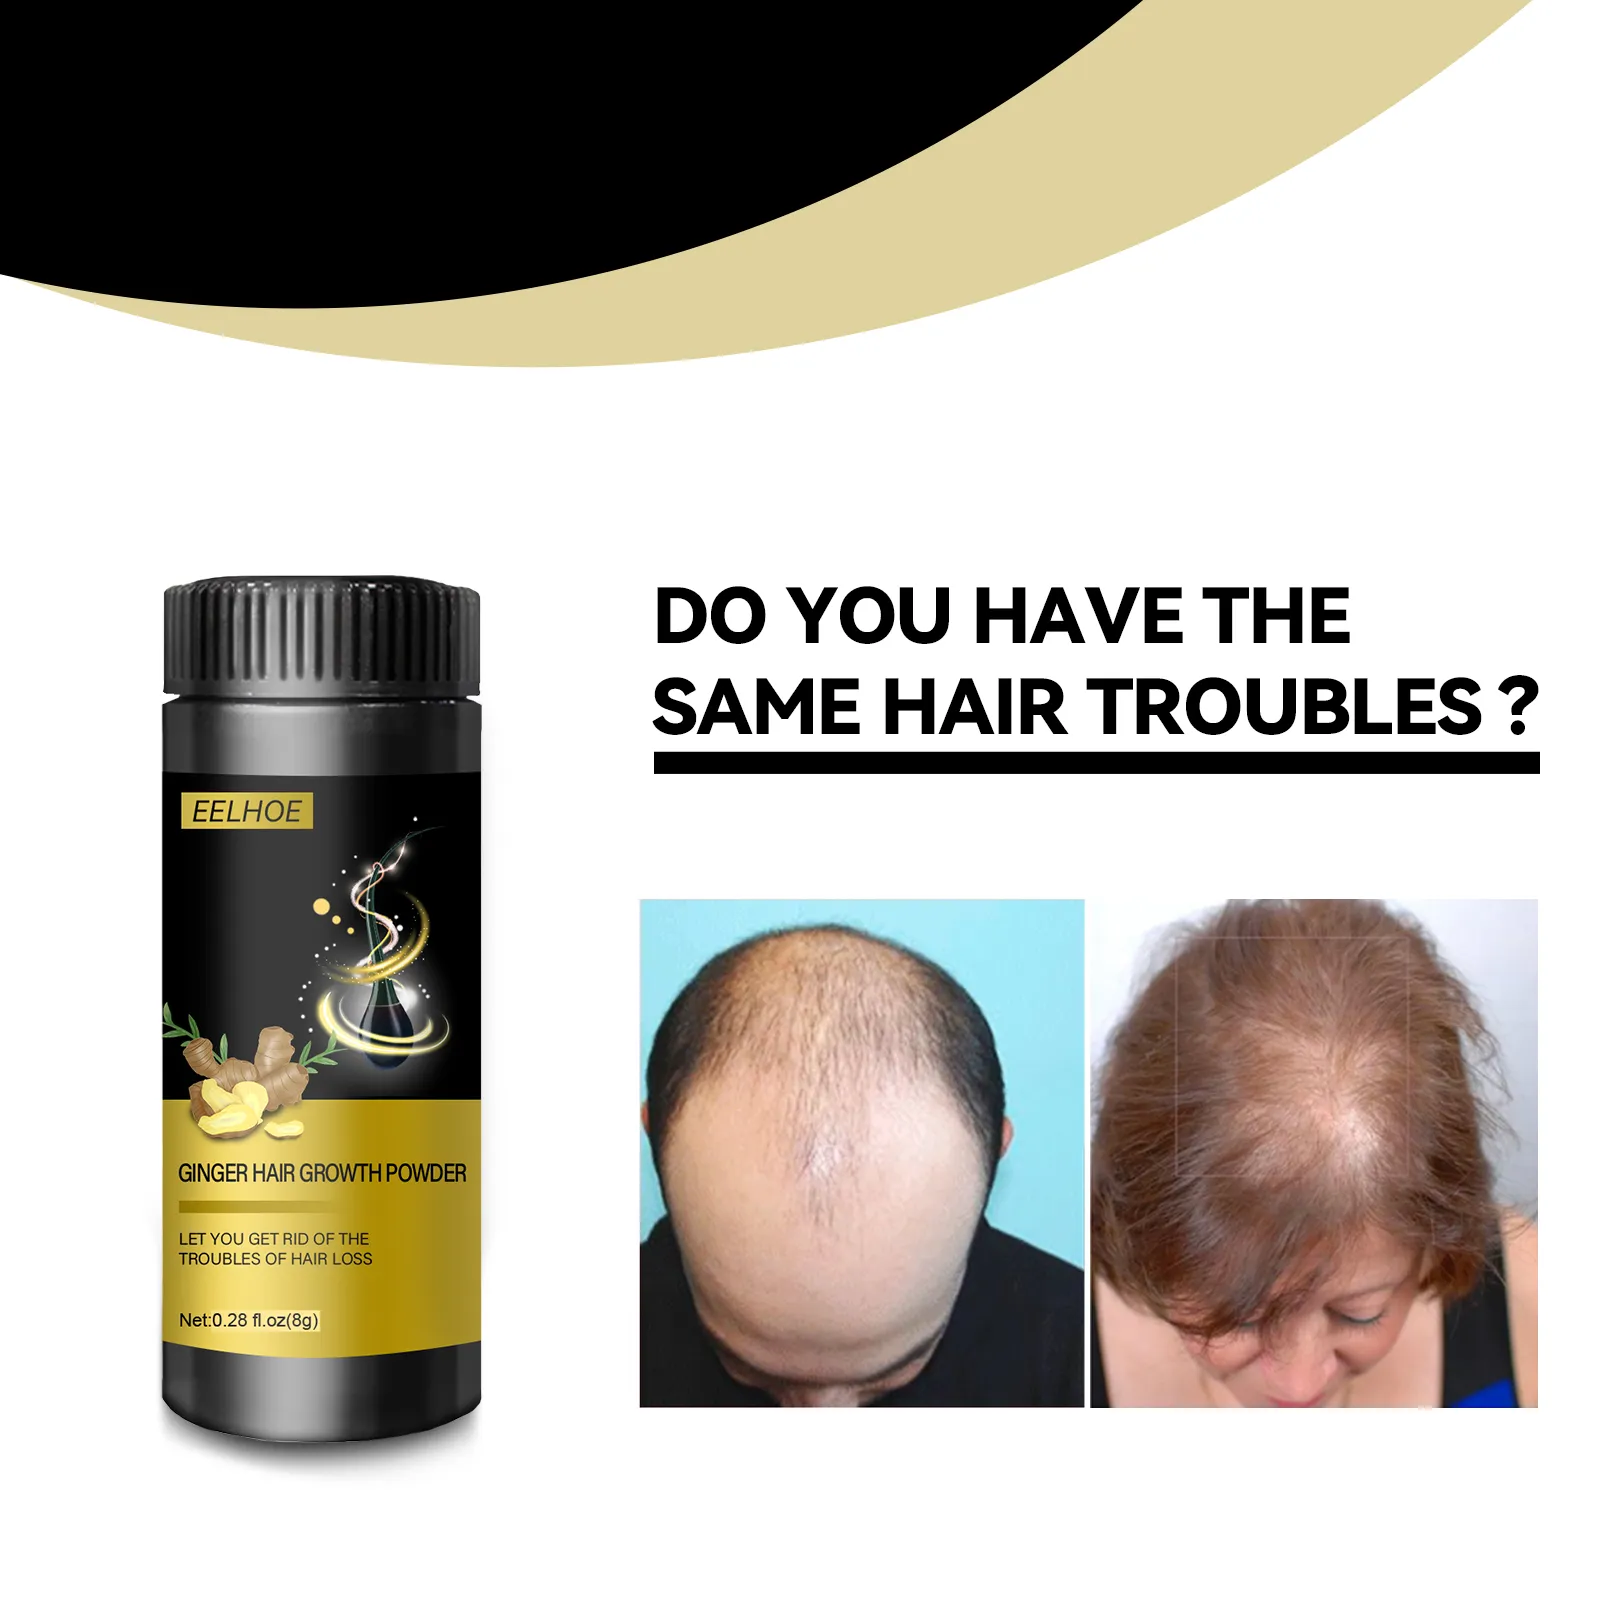 ESM Restore Confidence Hair Loss Powder Ginger Soften Hair Scalp Care  Growth Powder Natural For Salon Shopee Malaysia | Eelhoe Ginger Hair Powder  